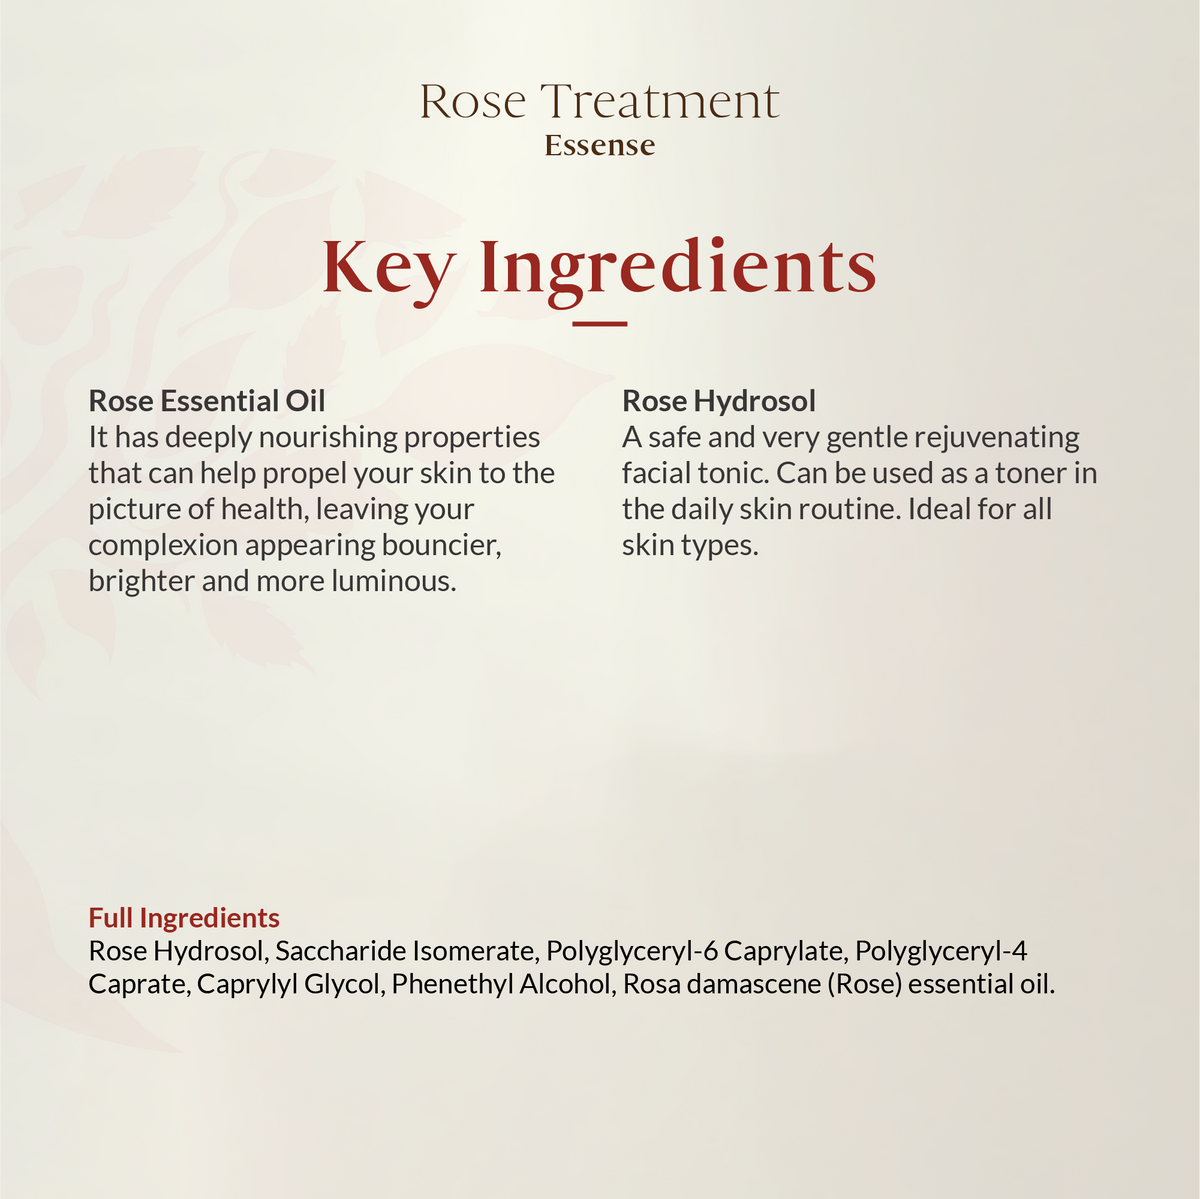 Rose Treatment Essence 200ml